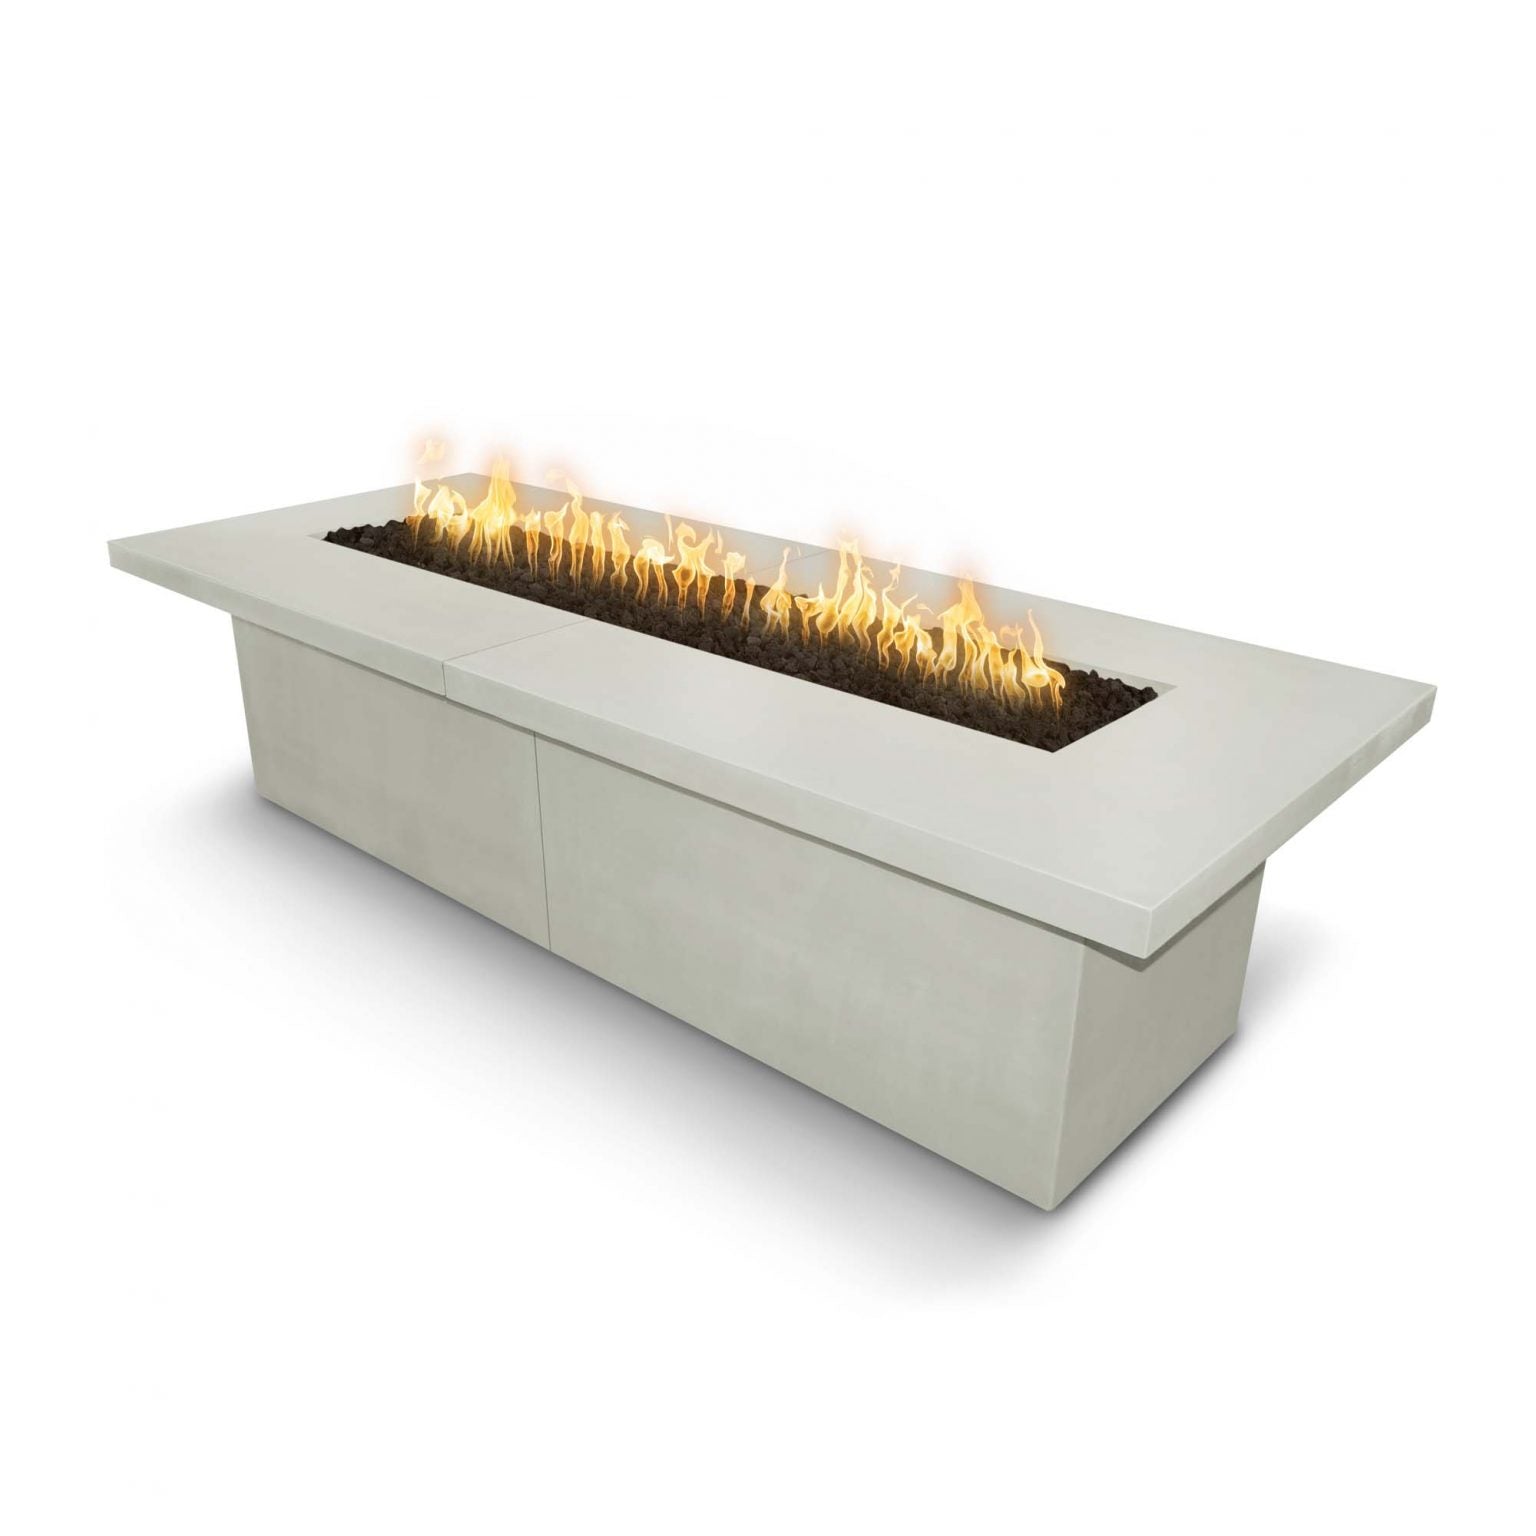 The Outdoor Plus Fire Pit 144" x 48" / Match Lit The Outdoor Plus Newport Fire Table | Concrete OPT-NPTT144